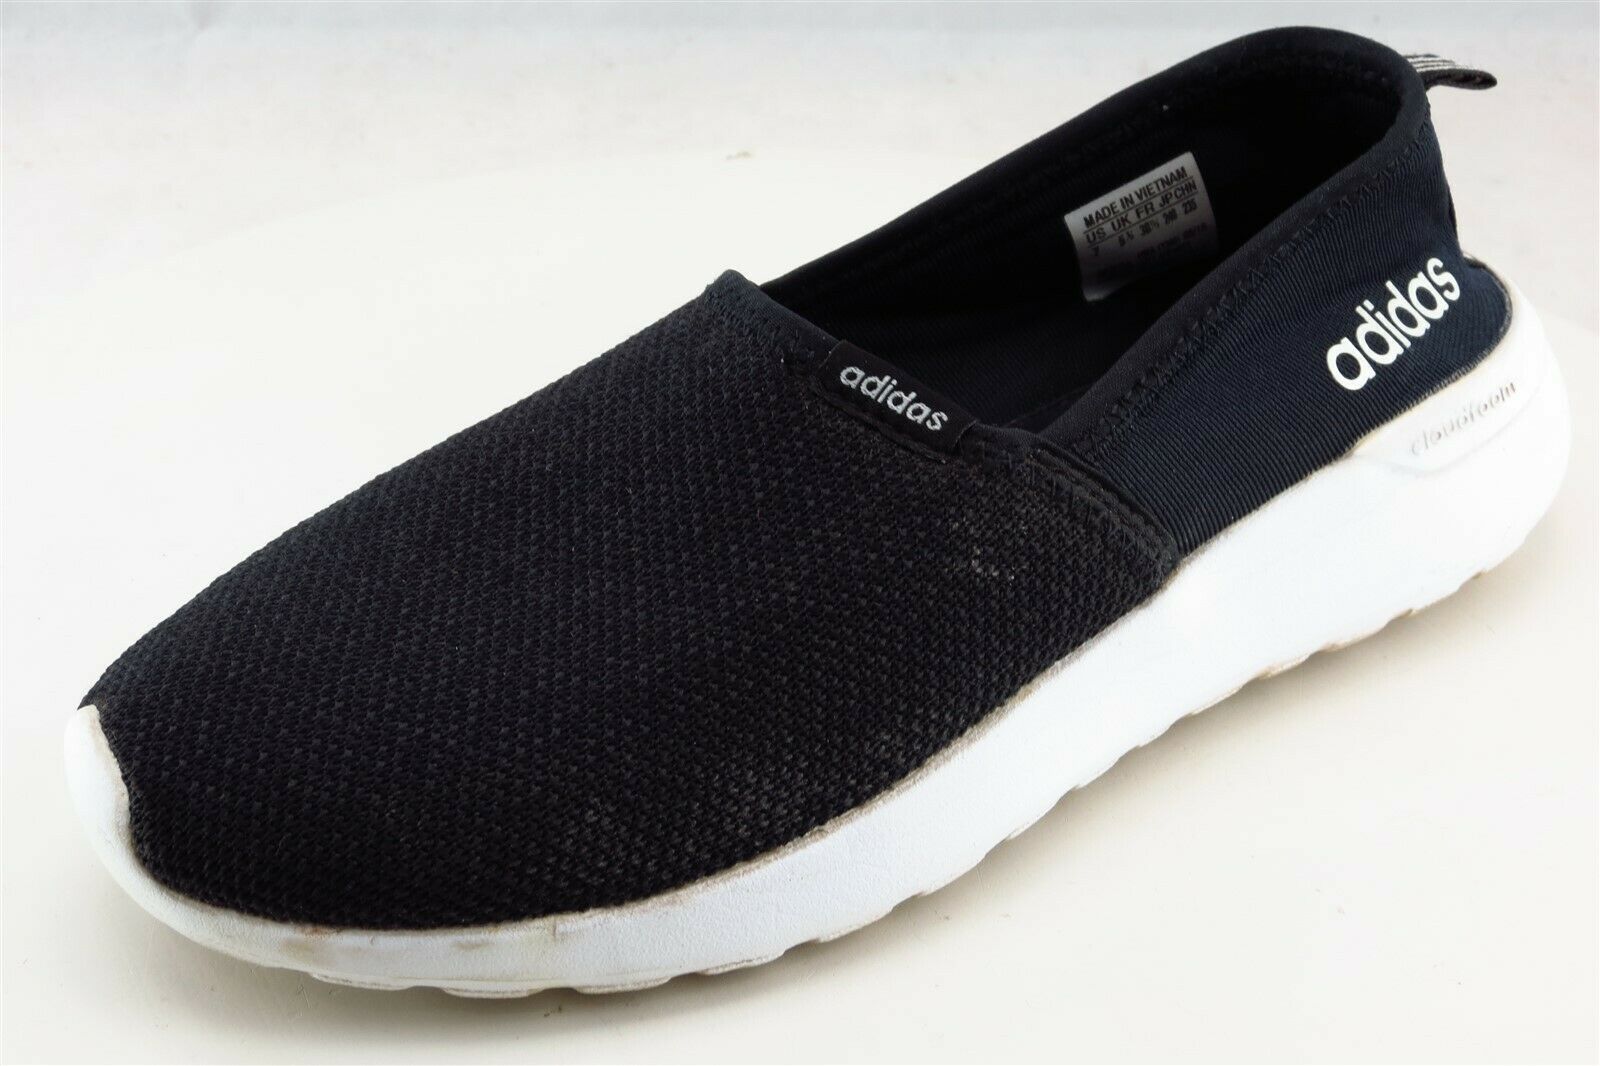 adidas Walking Shoes Black Fabric Women7Medium (B, M)